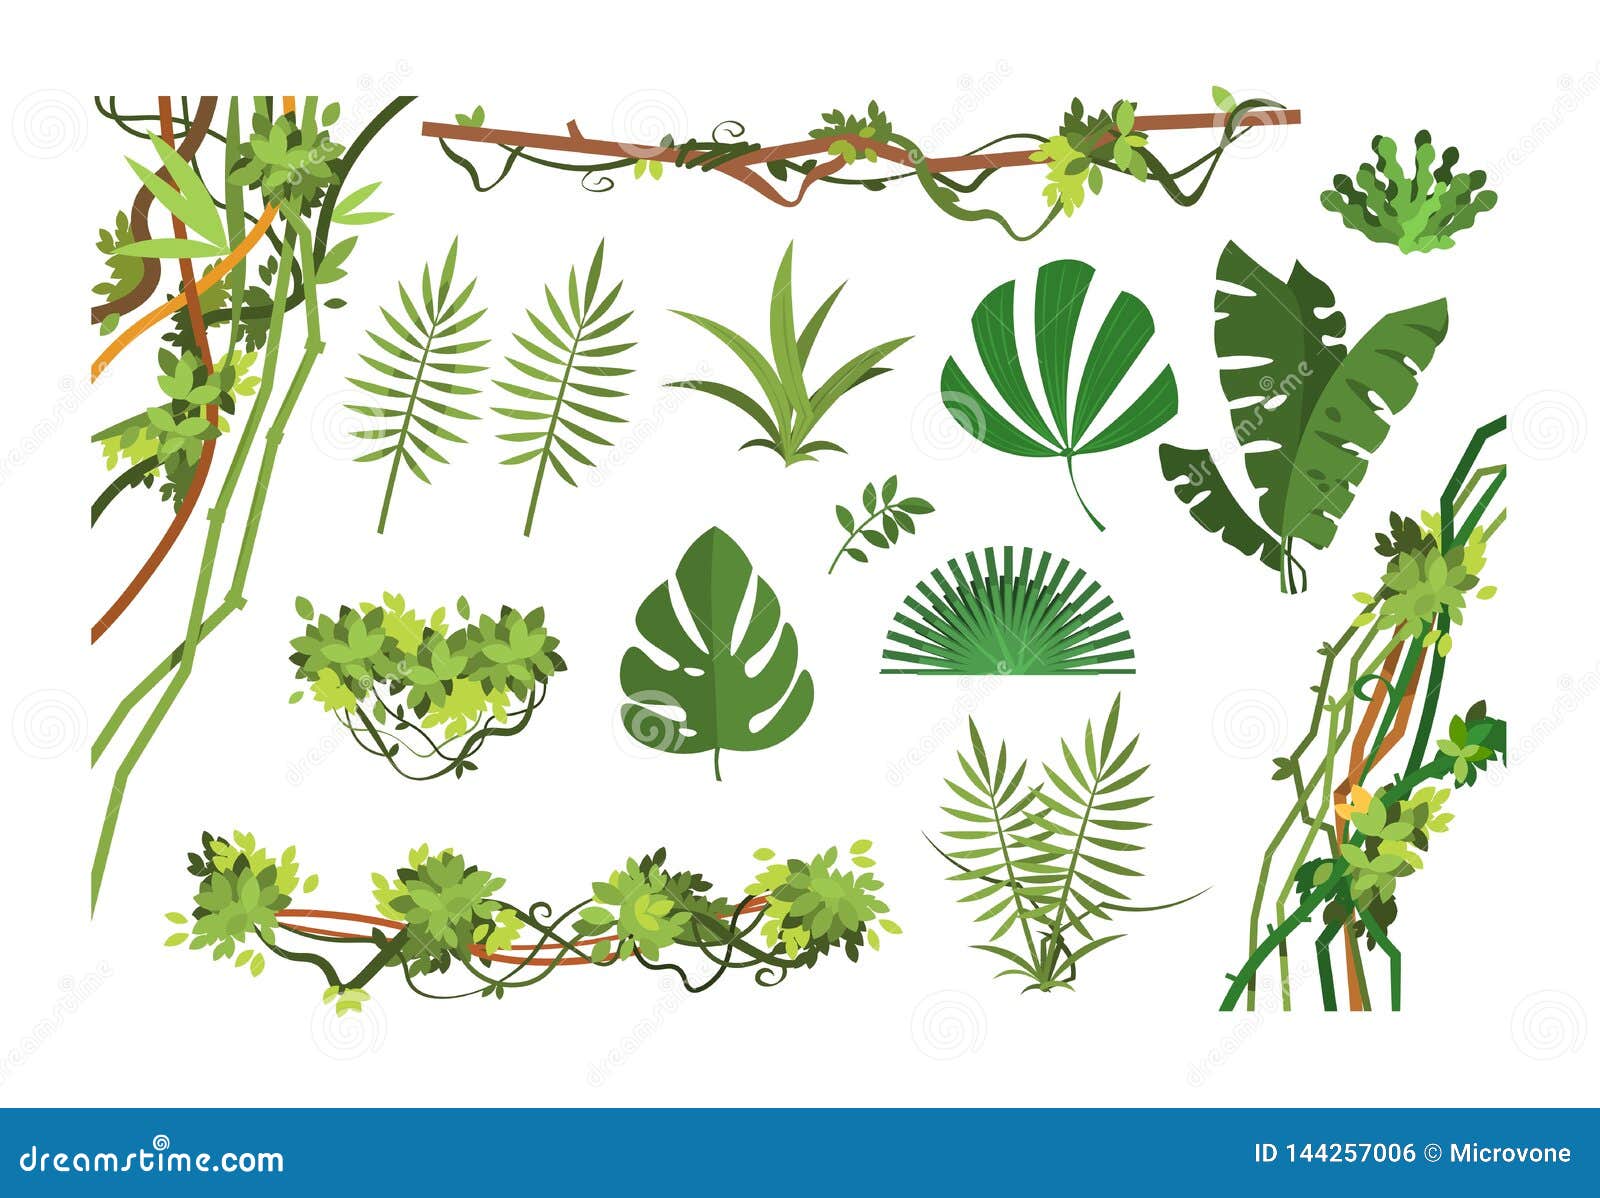 jungle vine. cartoon rainforest leaves and liana overgrown plants.   set